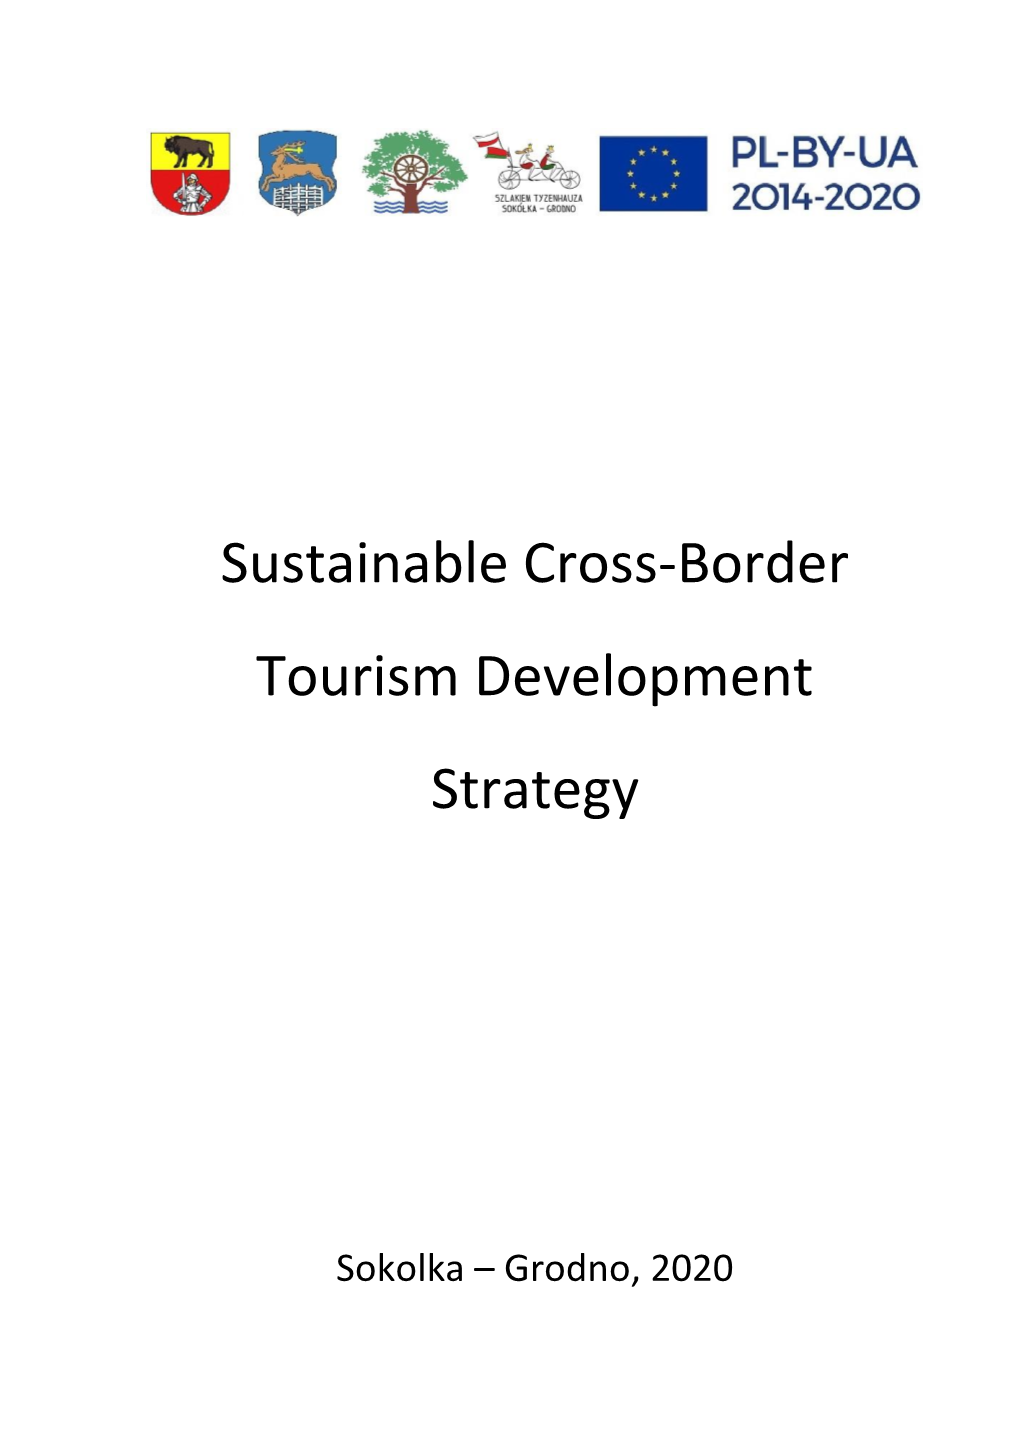 Sustainable Cross-Border Tourism Development Strategy